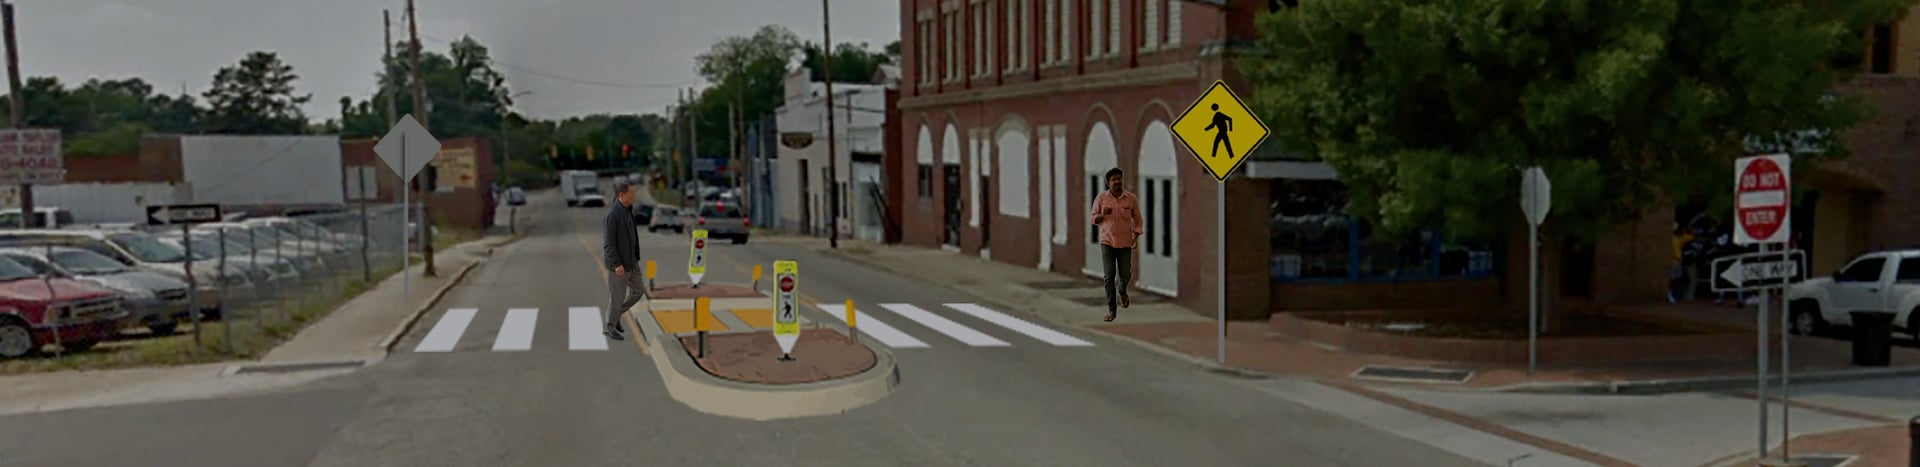 An example of a future pedestrian safety enhancement to a crosswalk through Lumberton’s historic downtown.